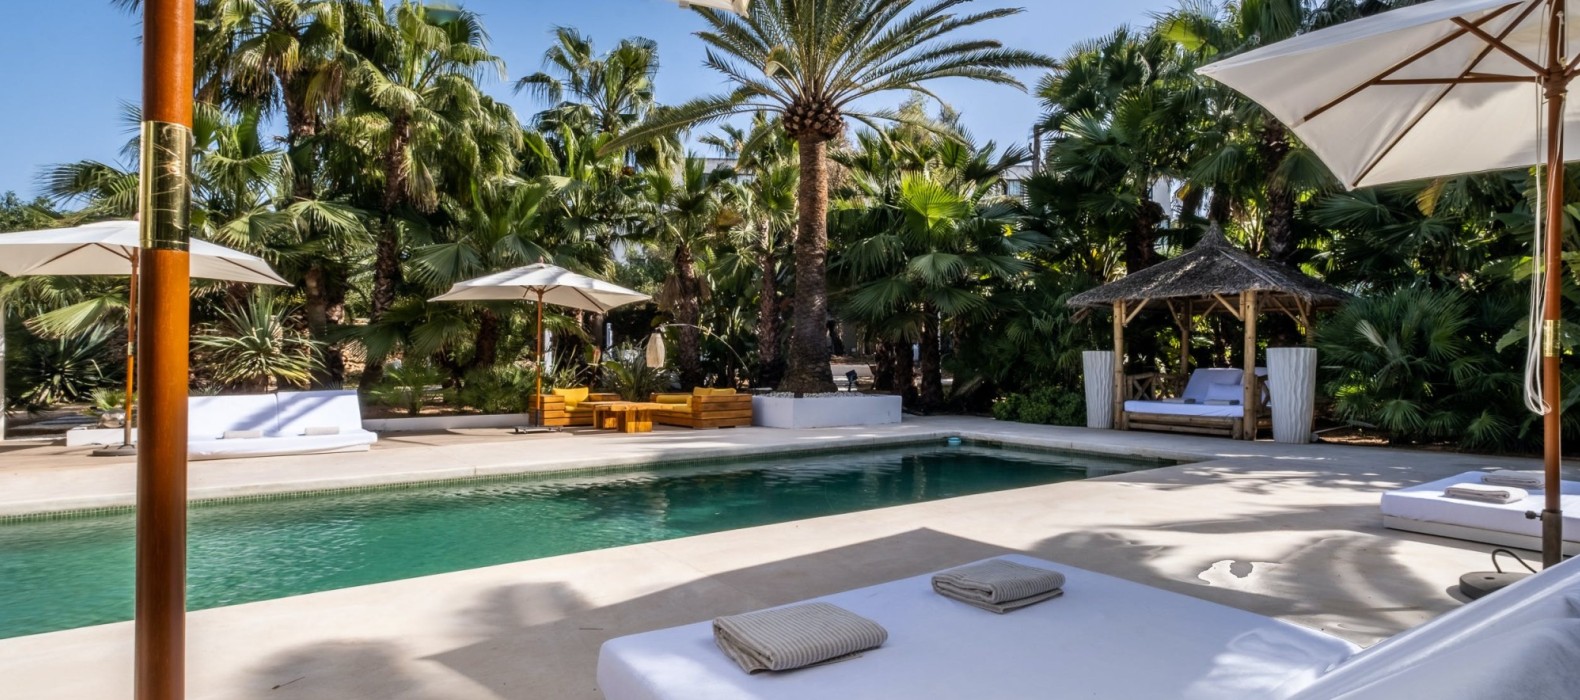 Exterior pool area of Villa Savant in Ibiza